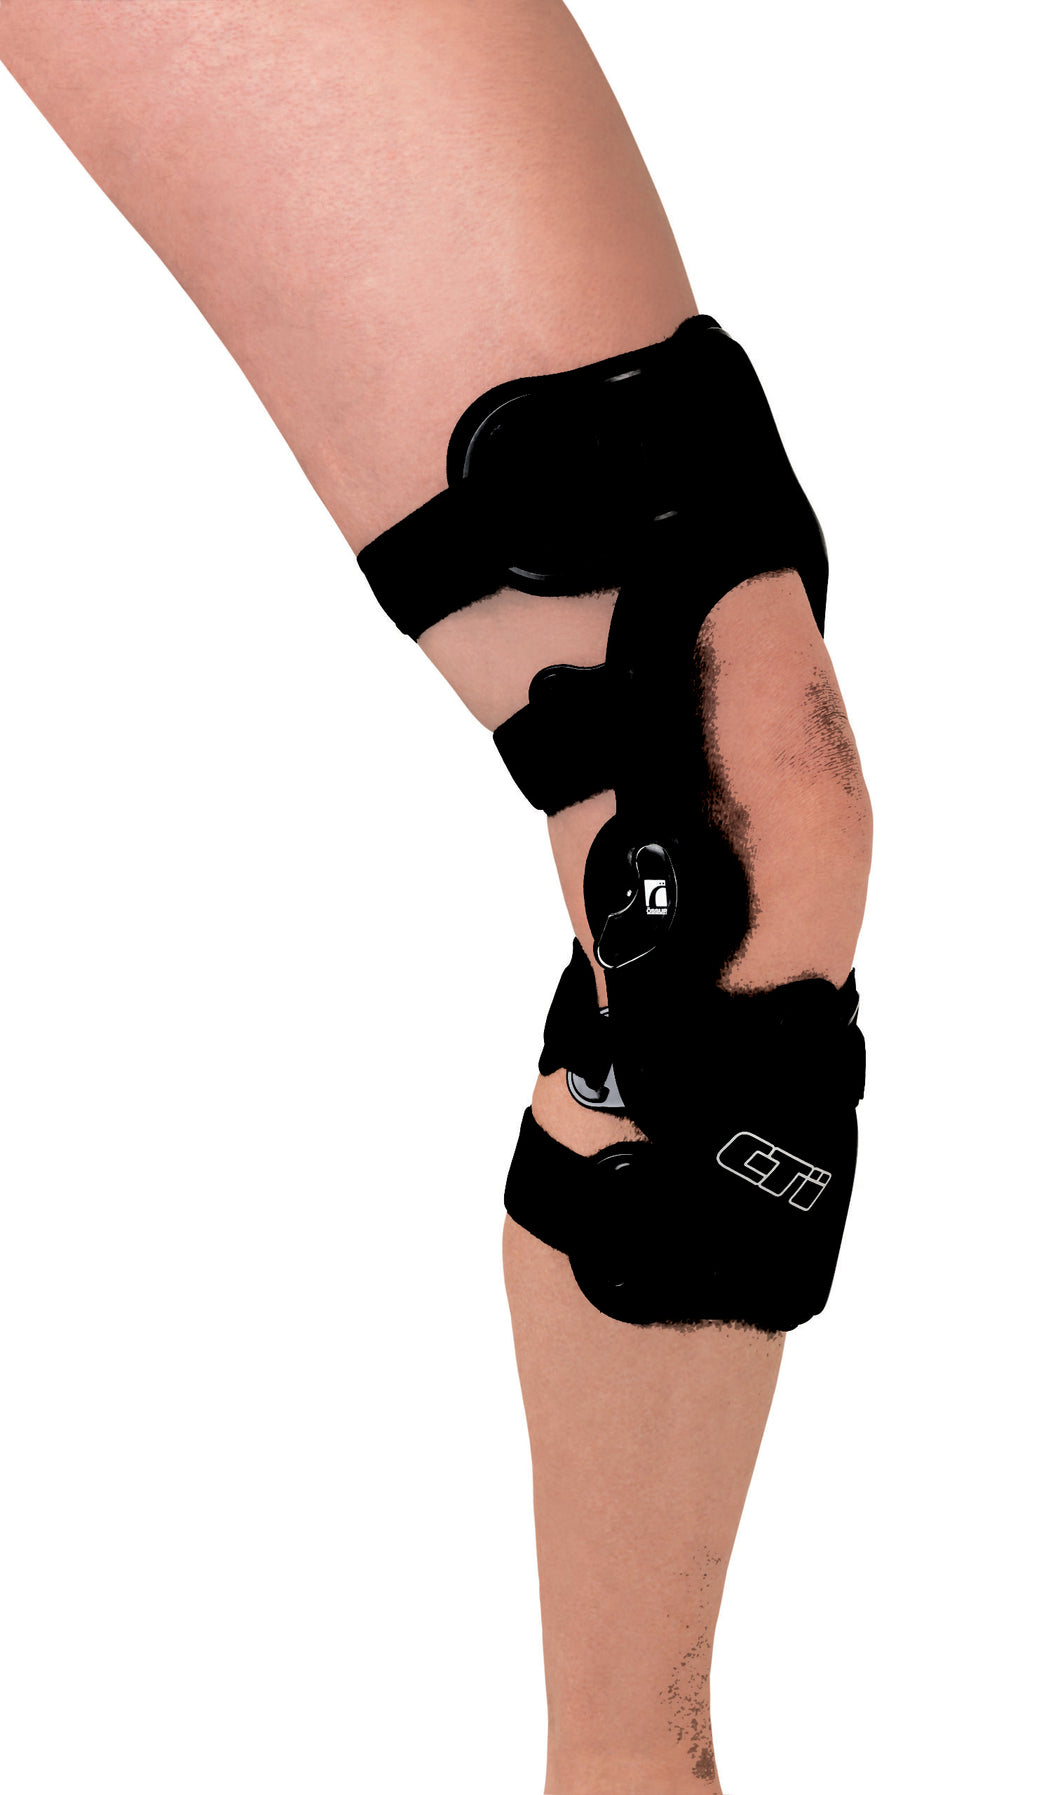 CTi ACL-PCL Knee Brace - Pro Sport Model - Left